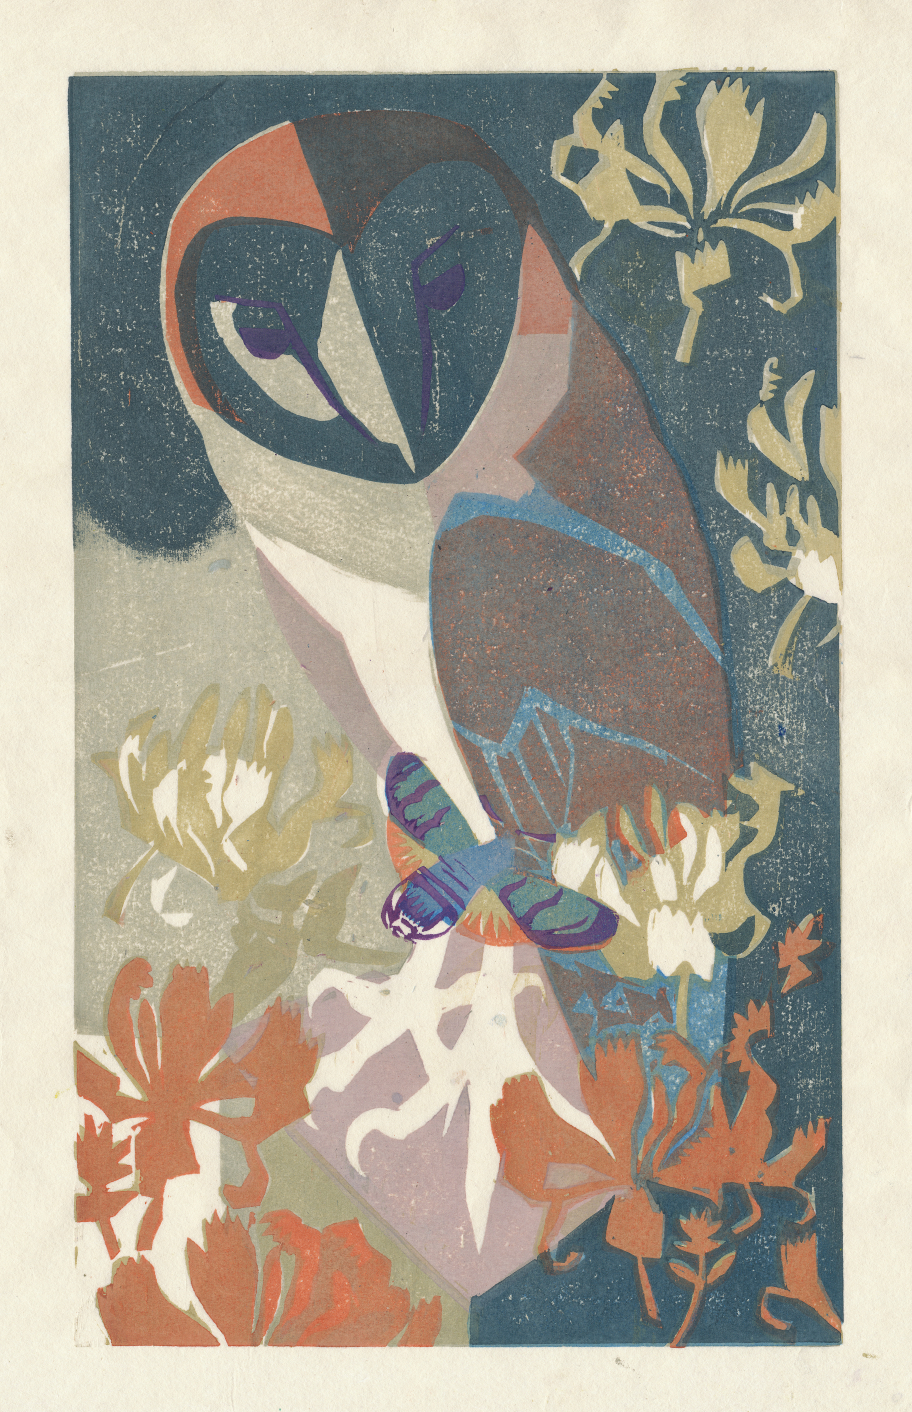   Twilight, Woodblock print, 52 cm x 39 cm